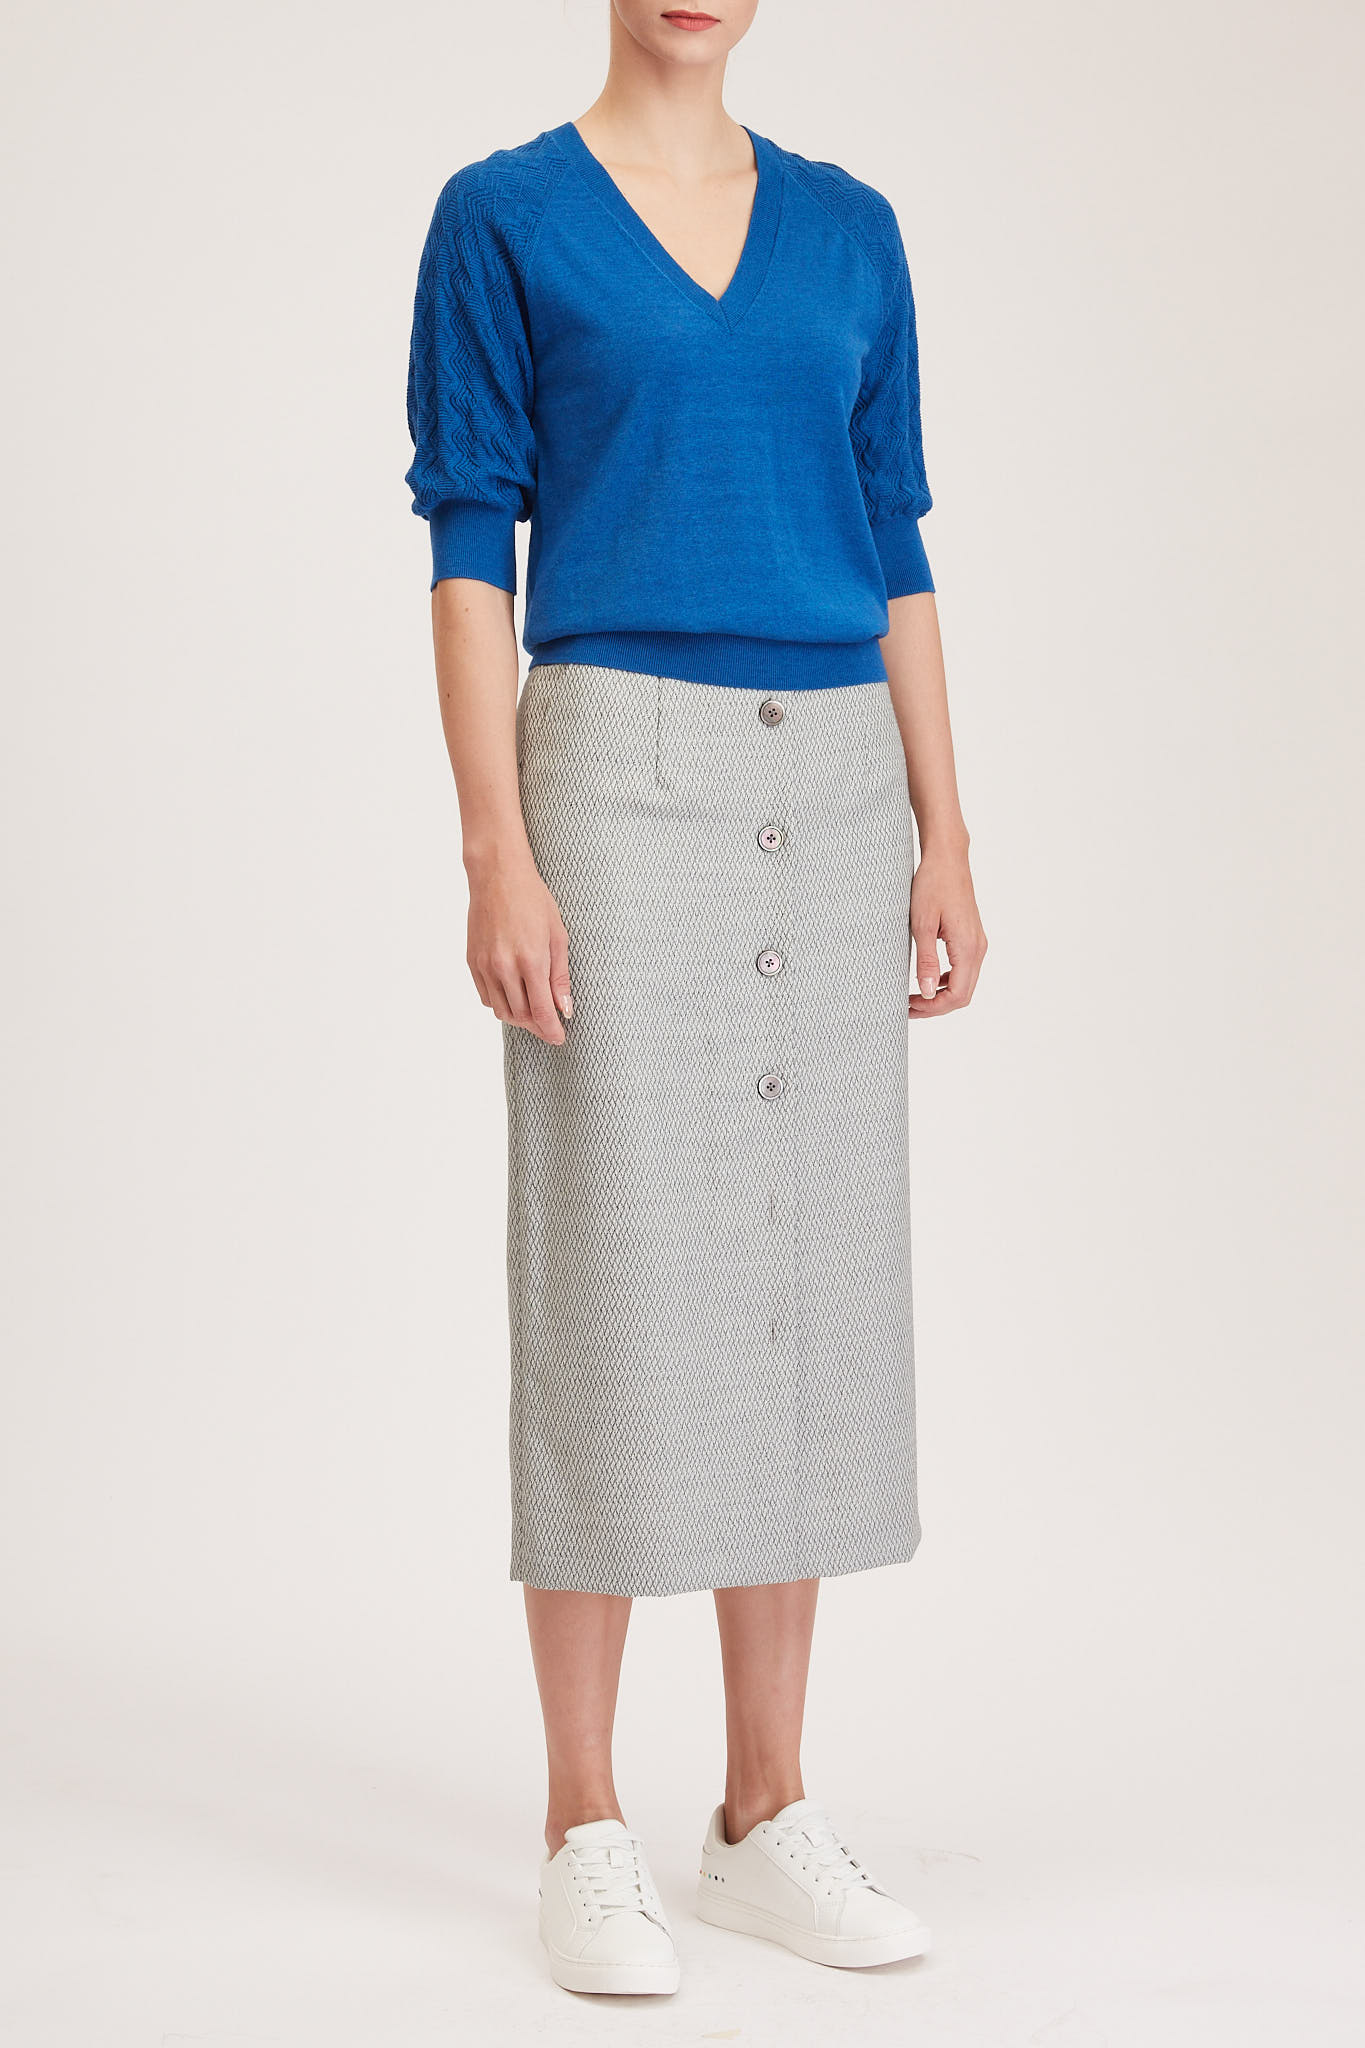 Whitby Knit T-Shirt – Plain knit,  V-neck t-shirt in royal blue